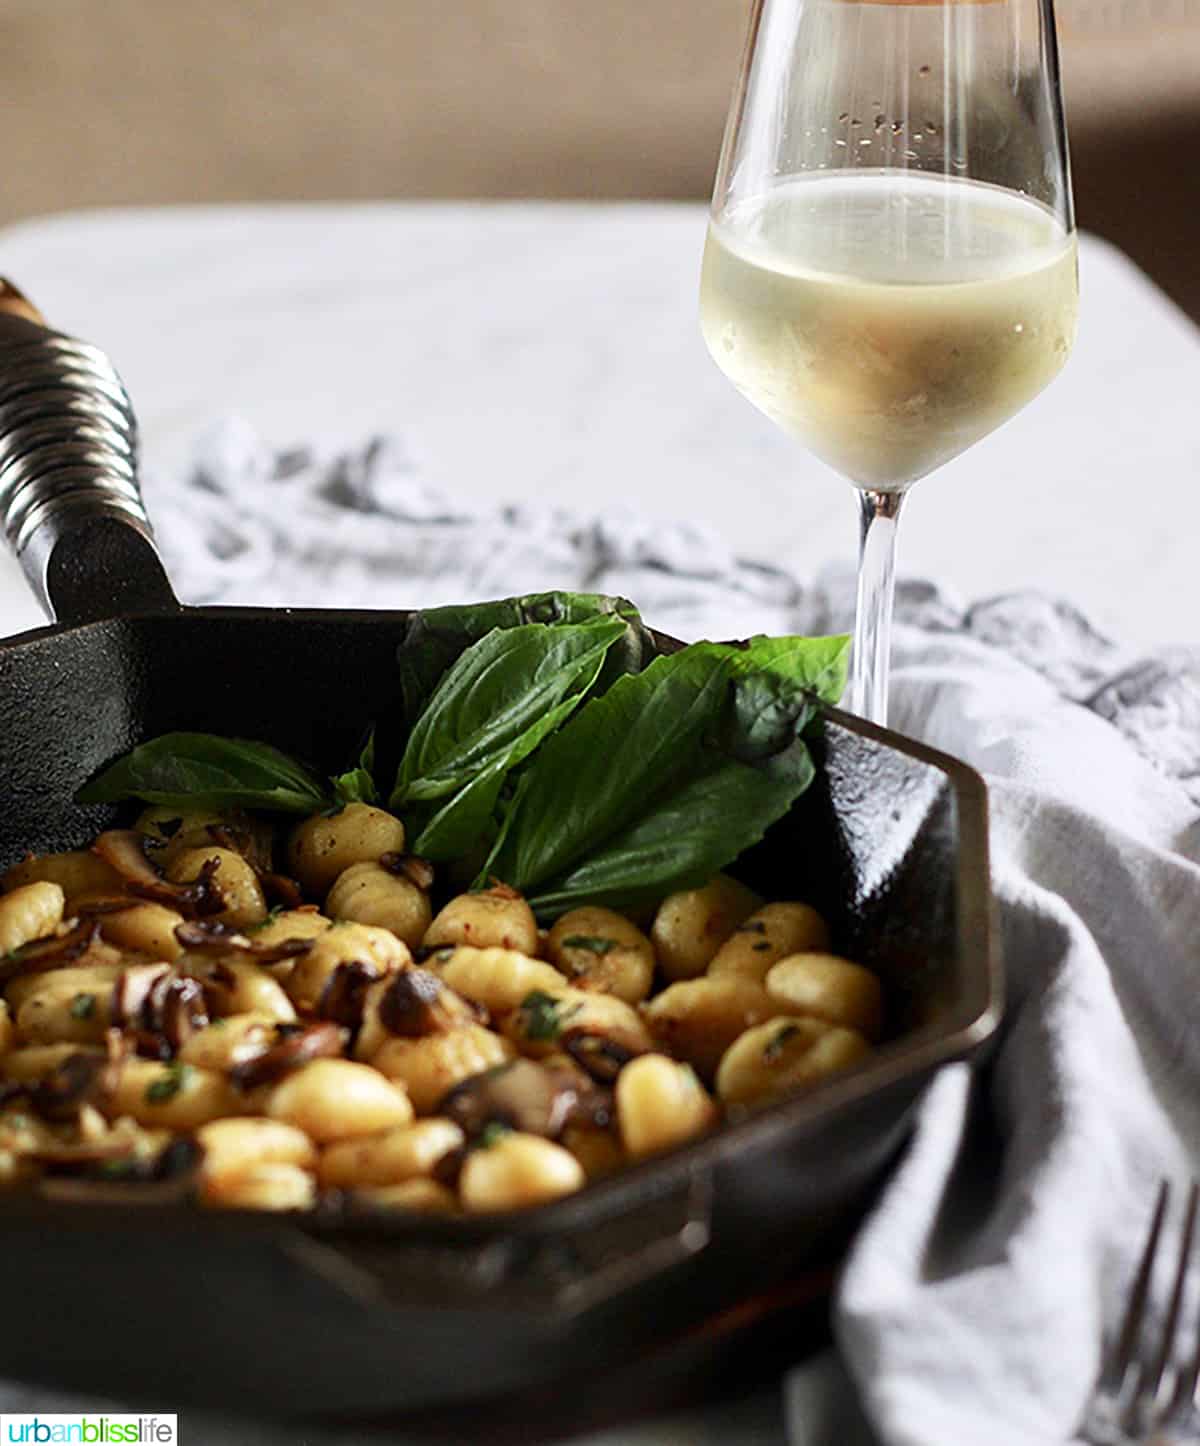 cast iron skillet with gnocchi, mushrooms, basil, glass of wine.